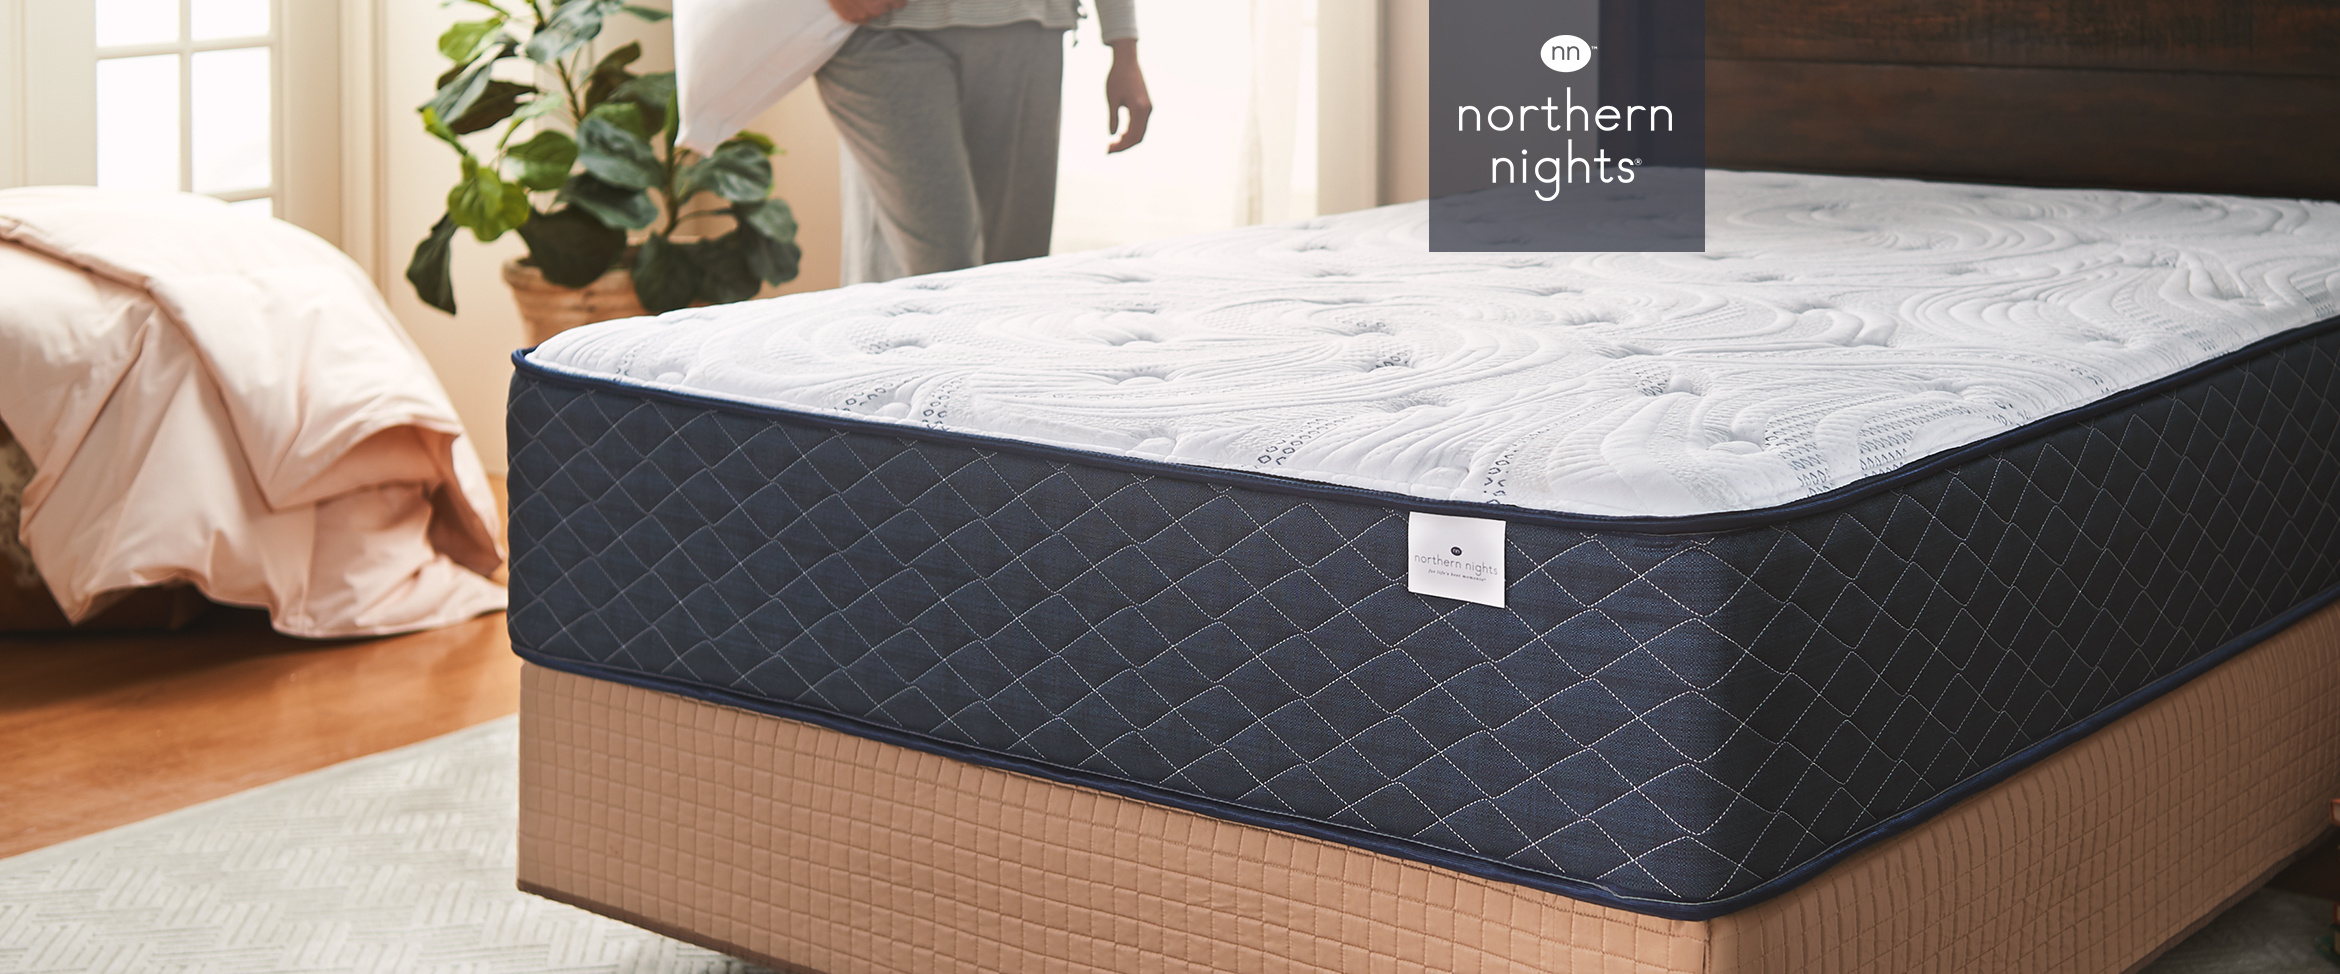 northern lights 11 dream hybrid mattress